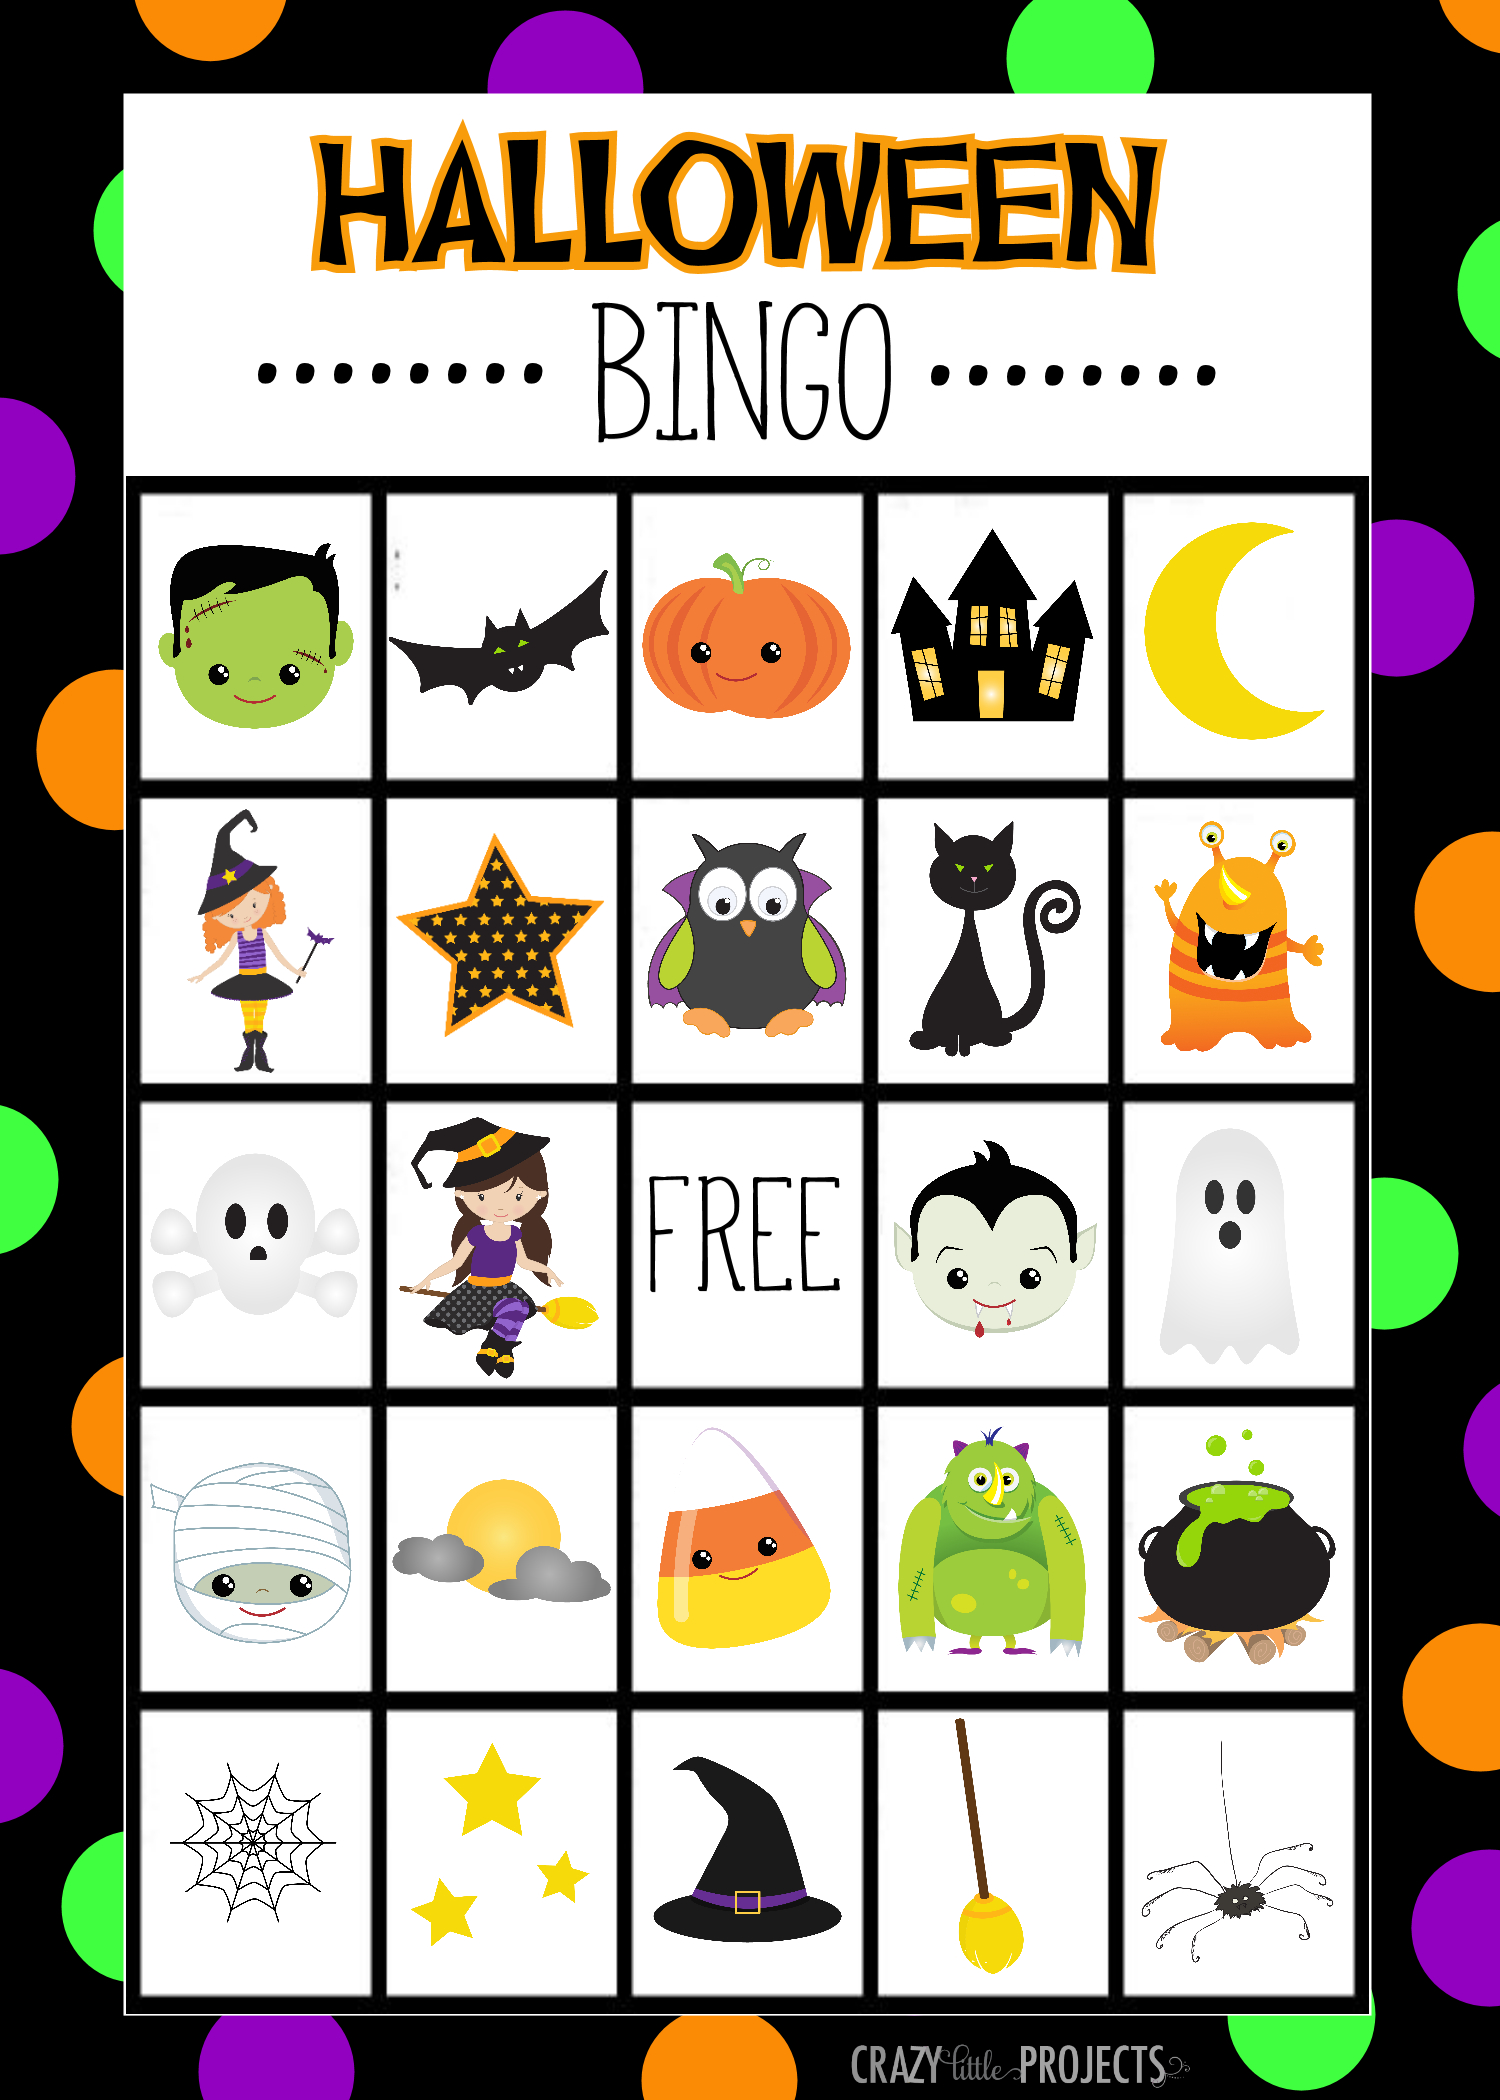 Halloween Bingo - Cute Free Printable Game | Halloween | Pinterest - Free Printable Halloween Bingo